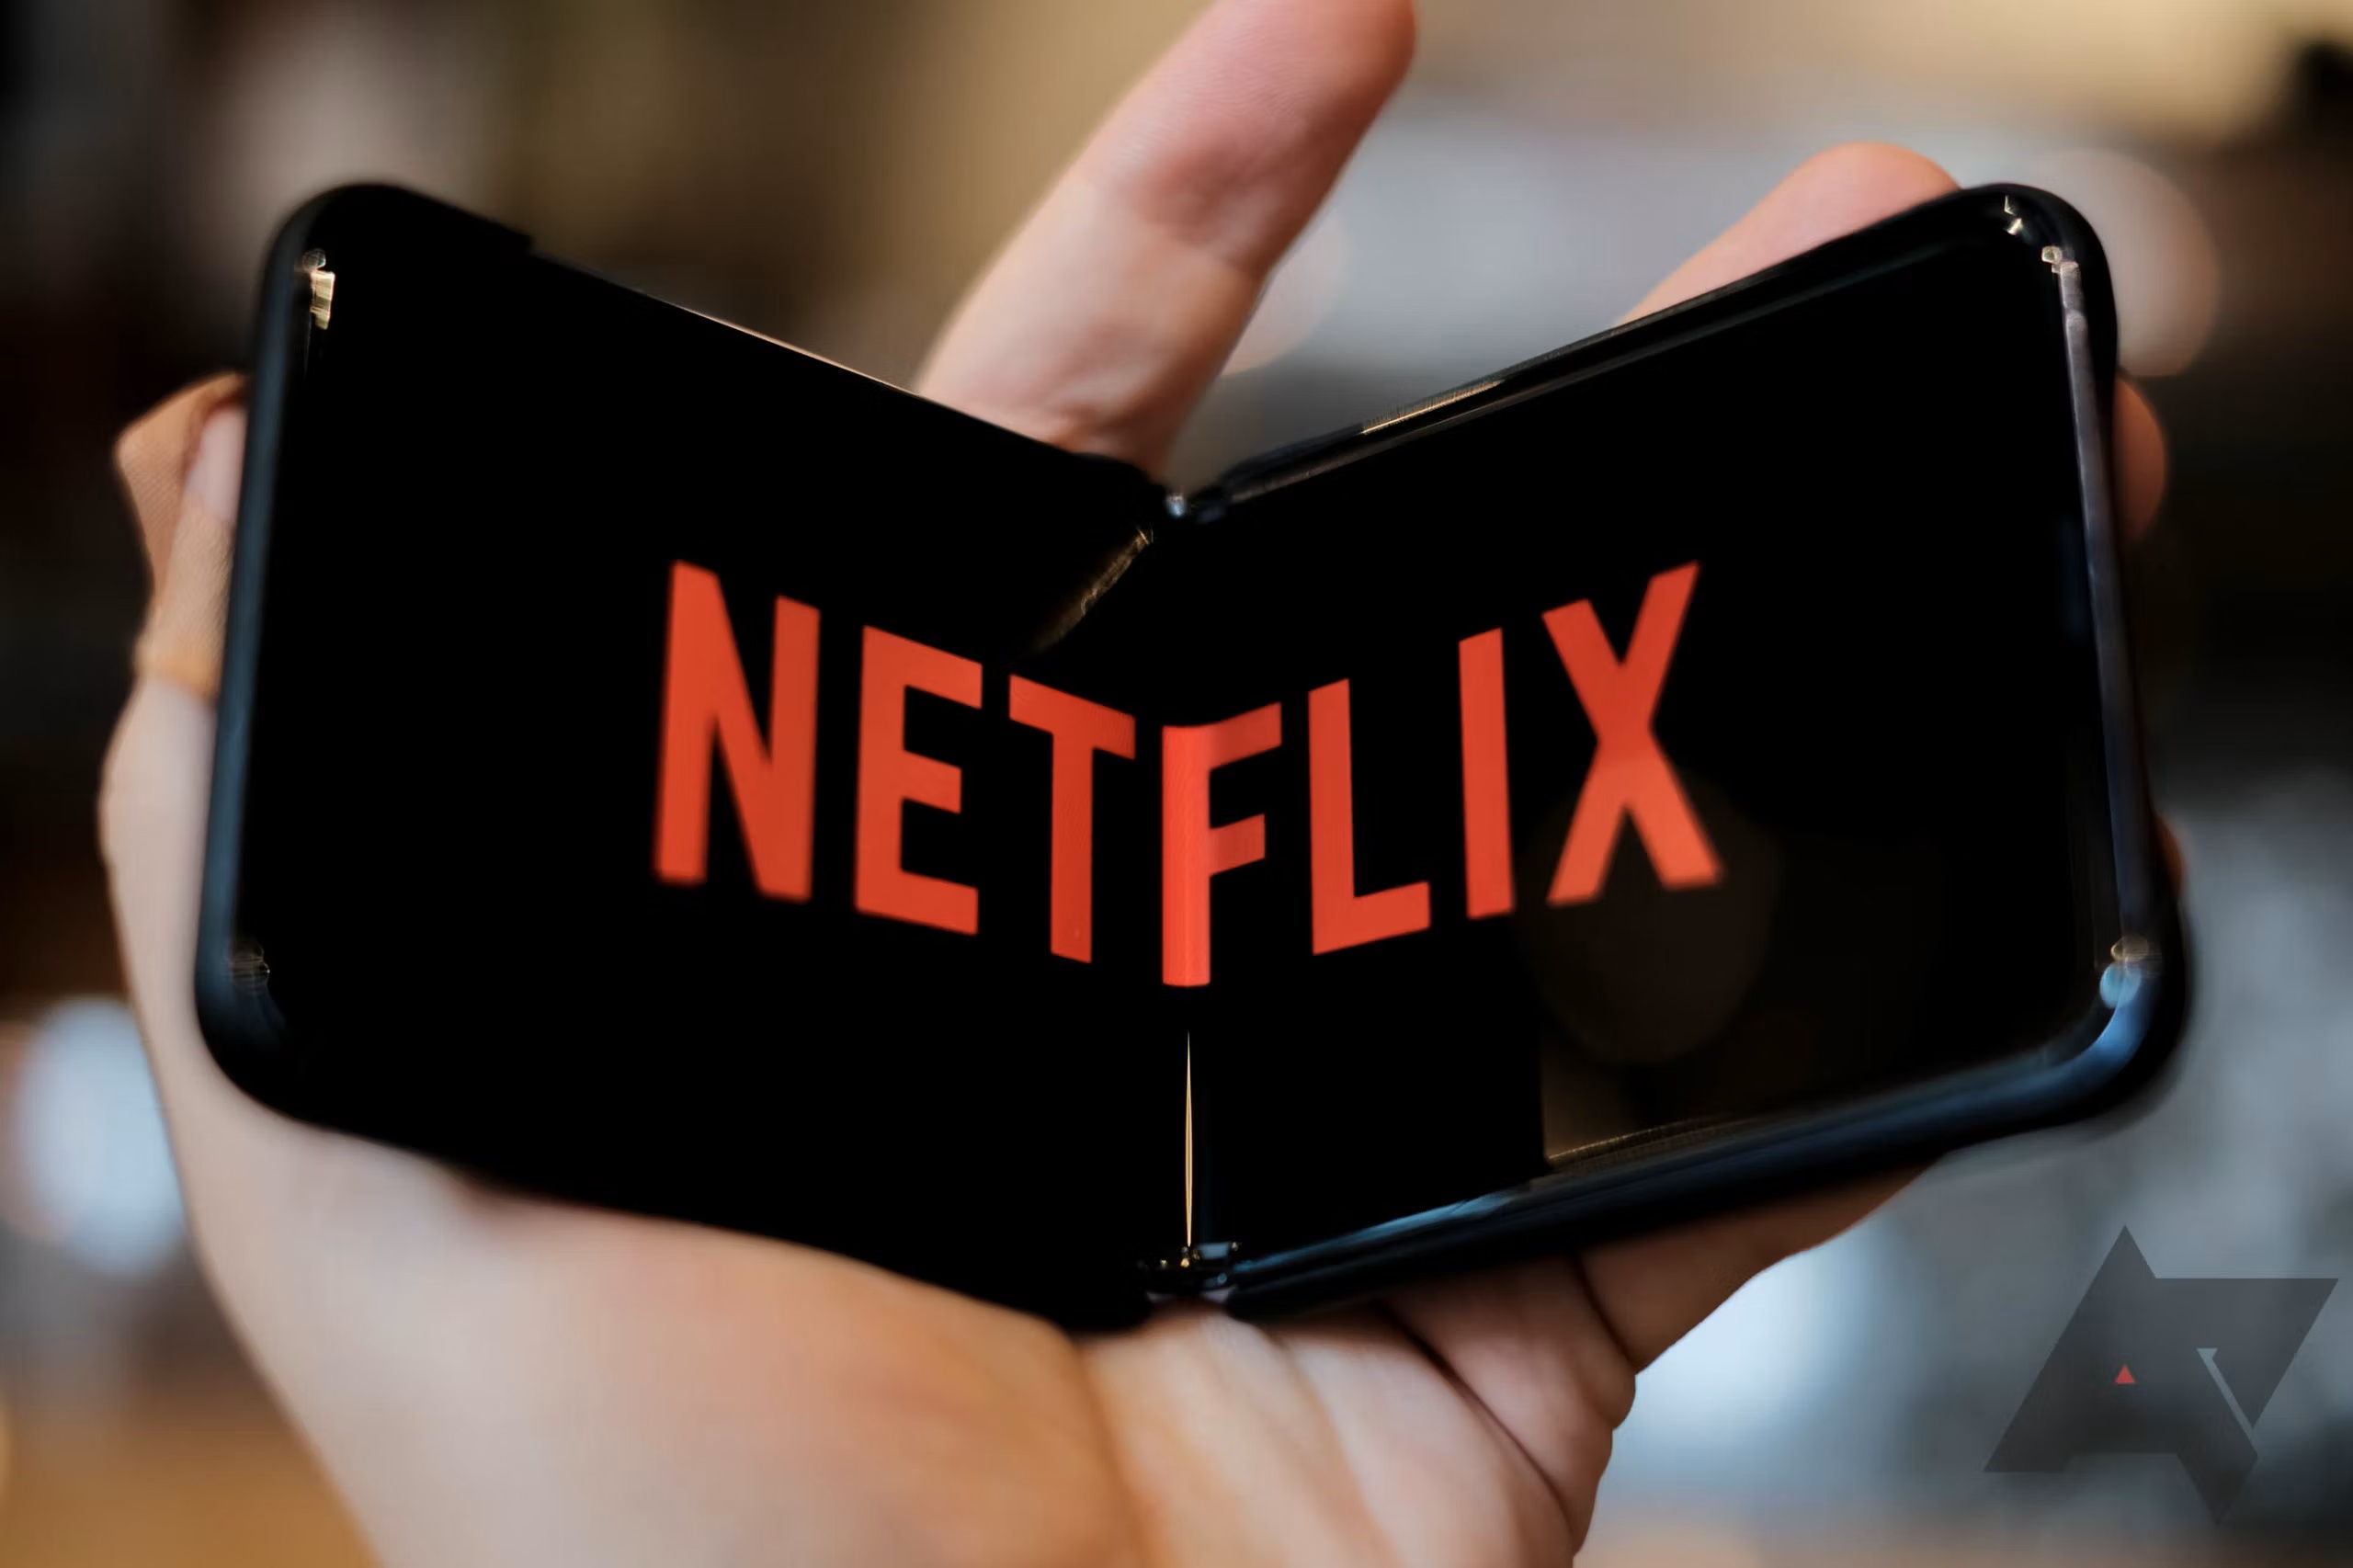 Netflix VPN Troubles